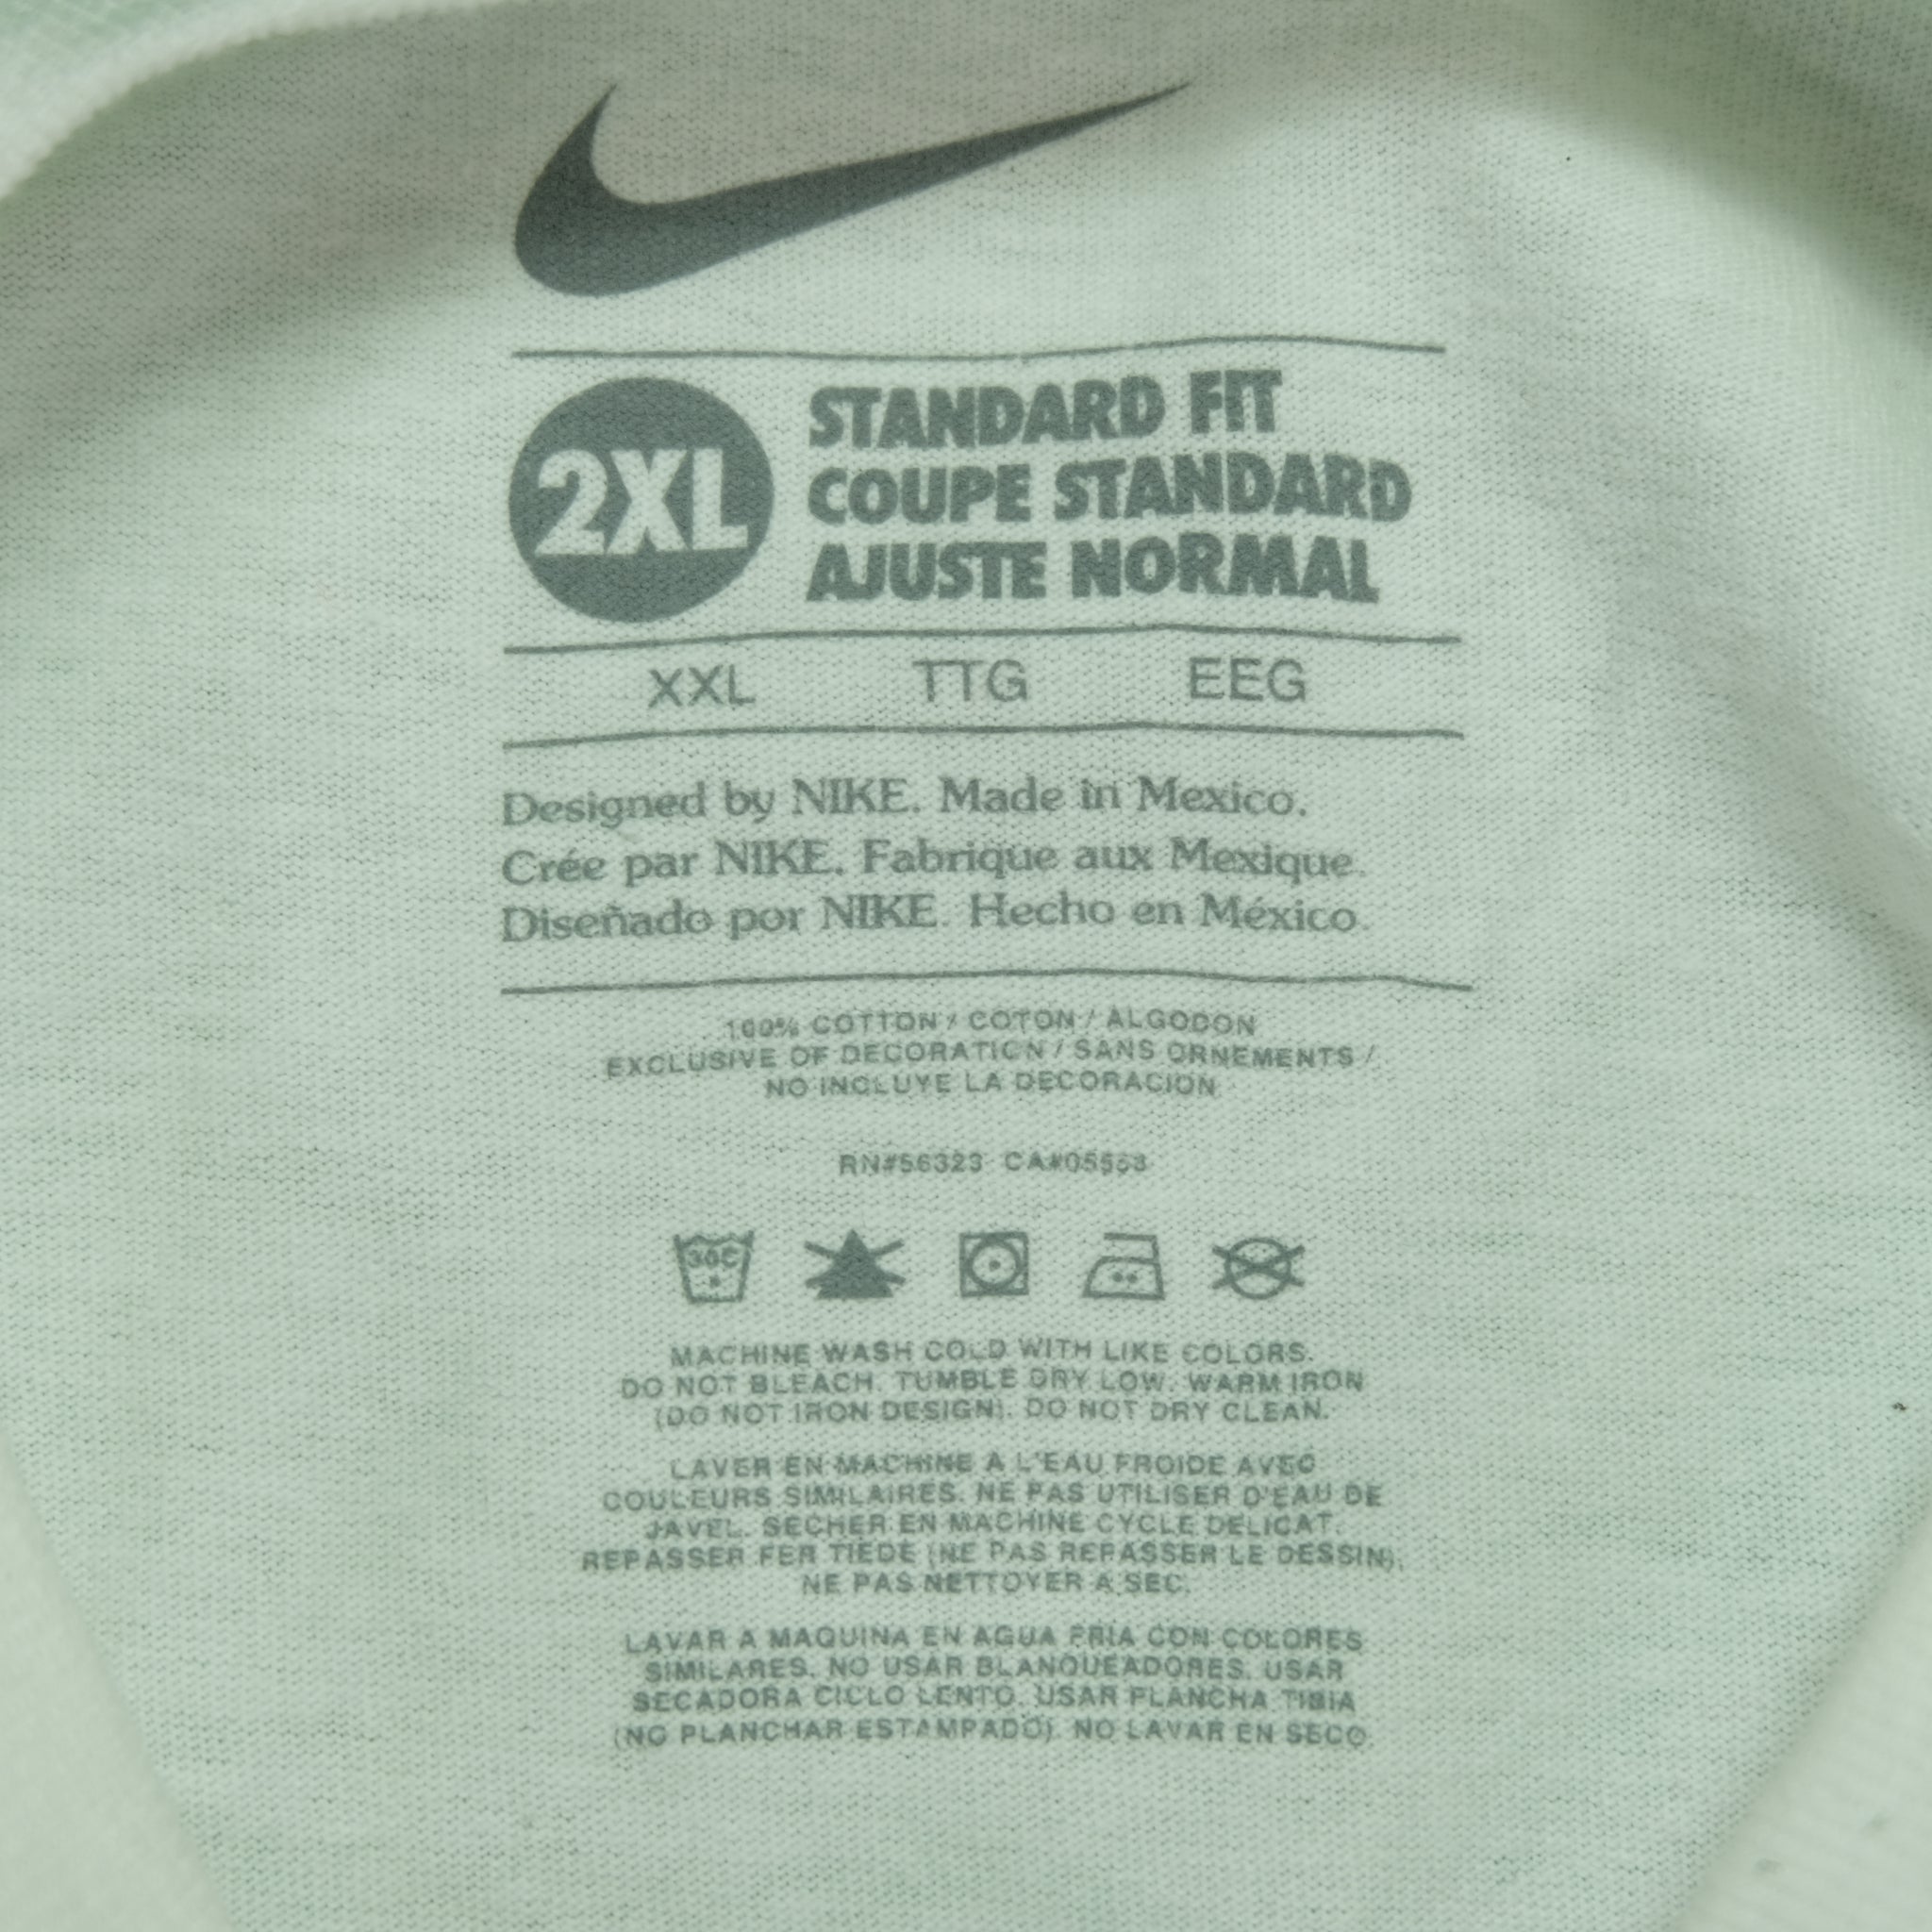 RARE Nike Lebron James Kobe Bryant Puppet Commercial T-Shirt BOYS SMALL  391321